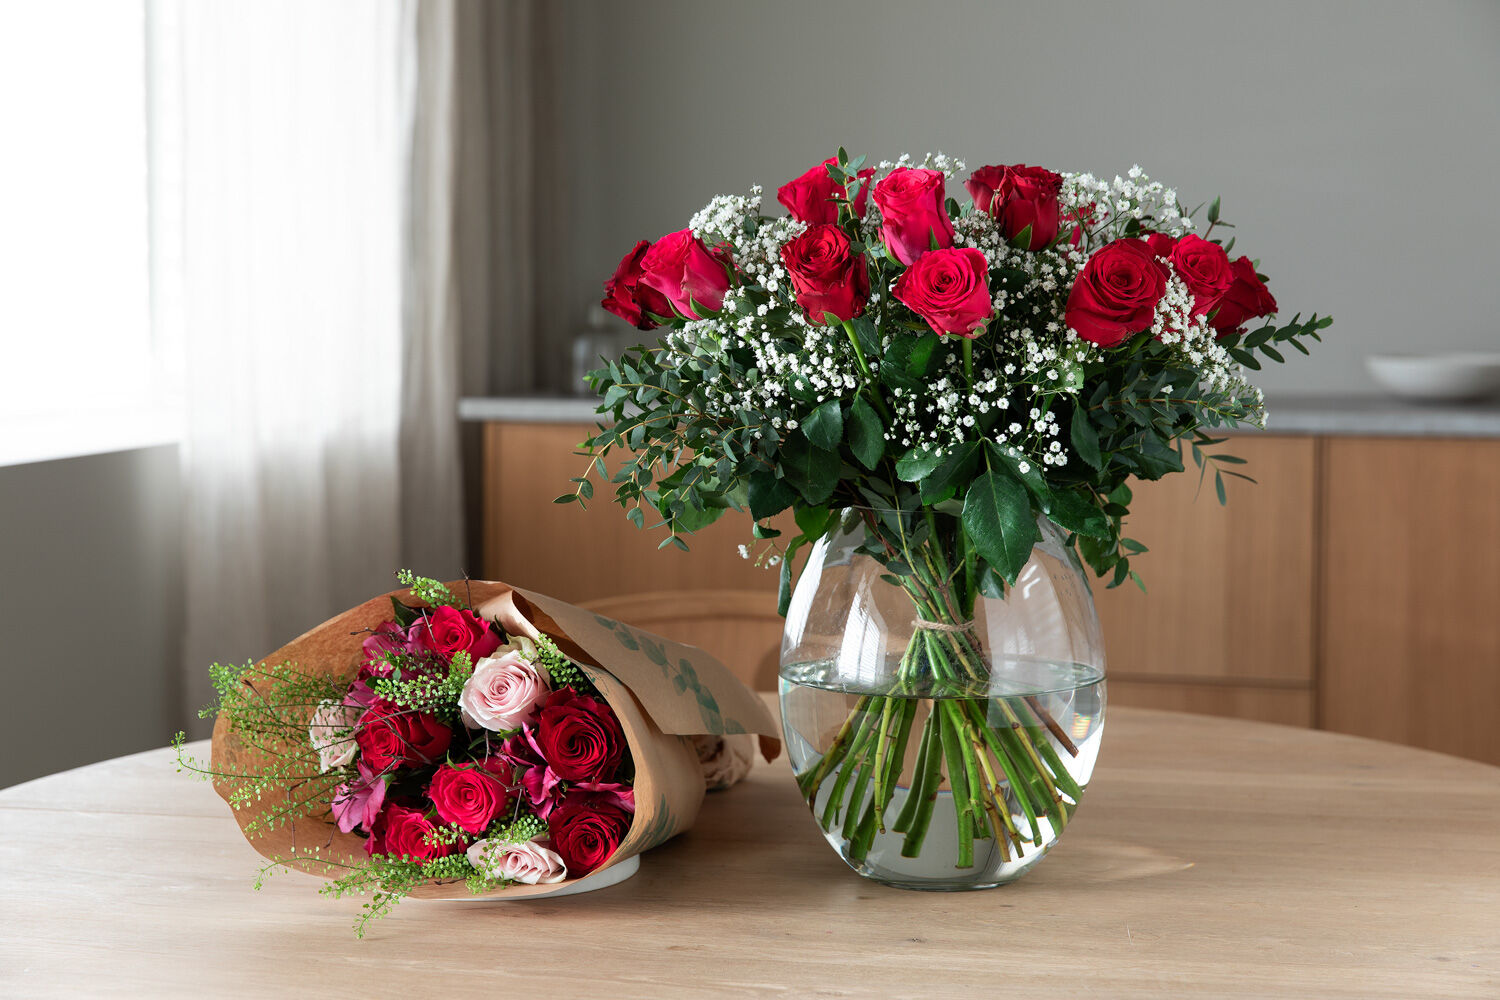 send blomster hjem til kjæresten til Valentine